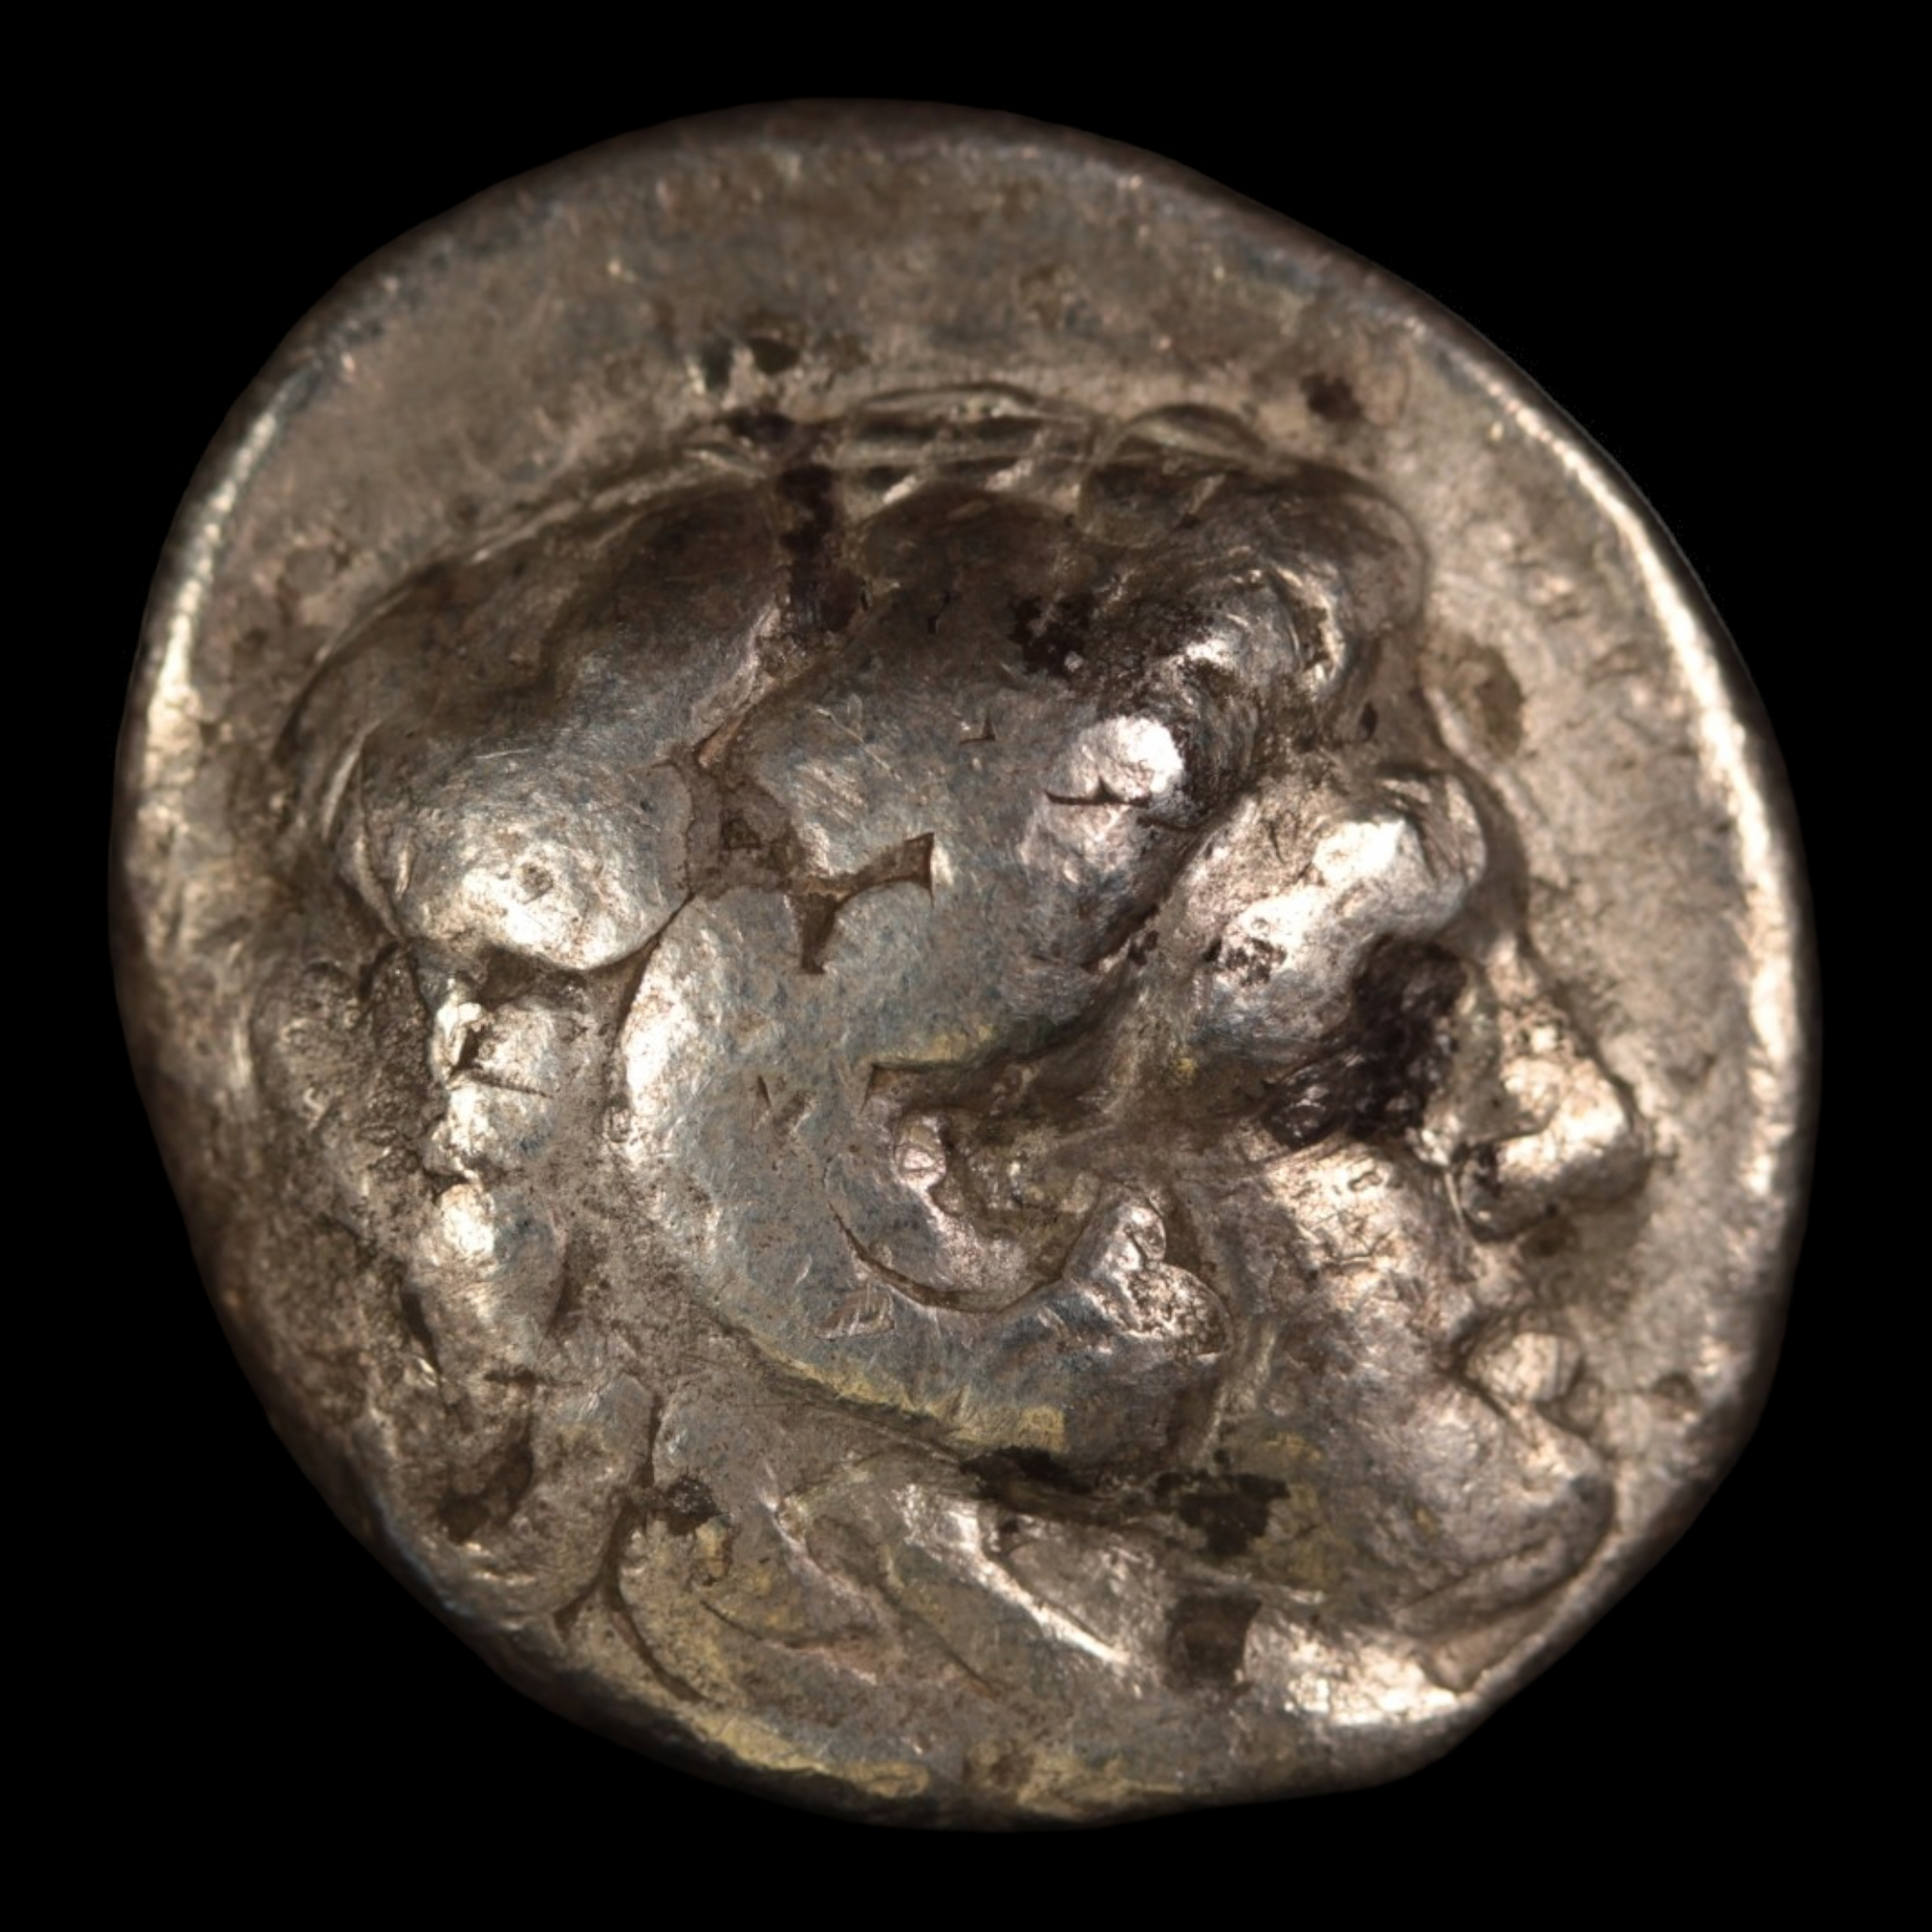 Alexander the Great, Silver Tetradrachm (15.95g, 26mm) - c. 336 to 167 BCE - Macedon/Greece - 8/30/23 Auction